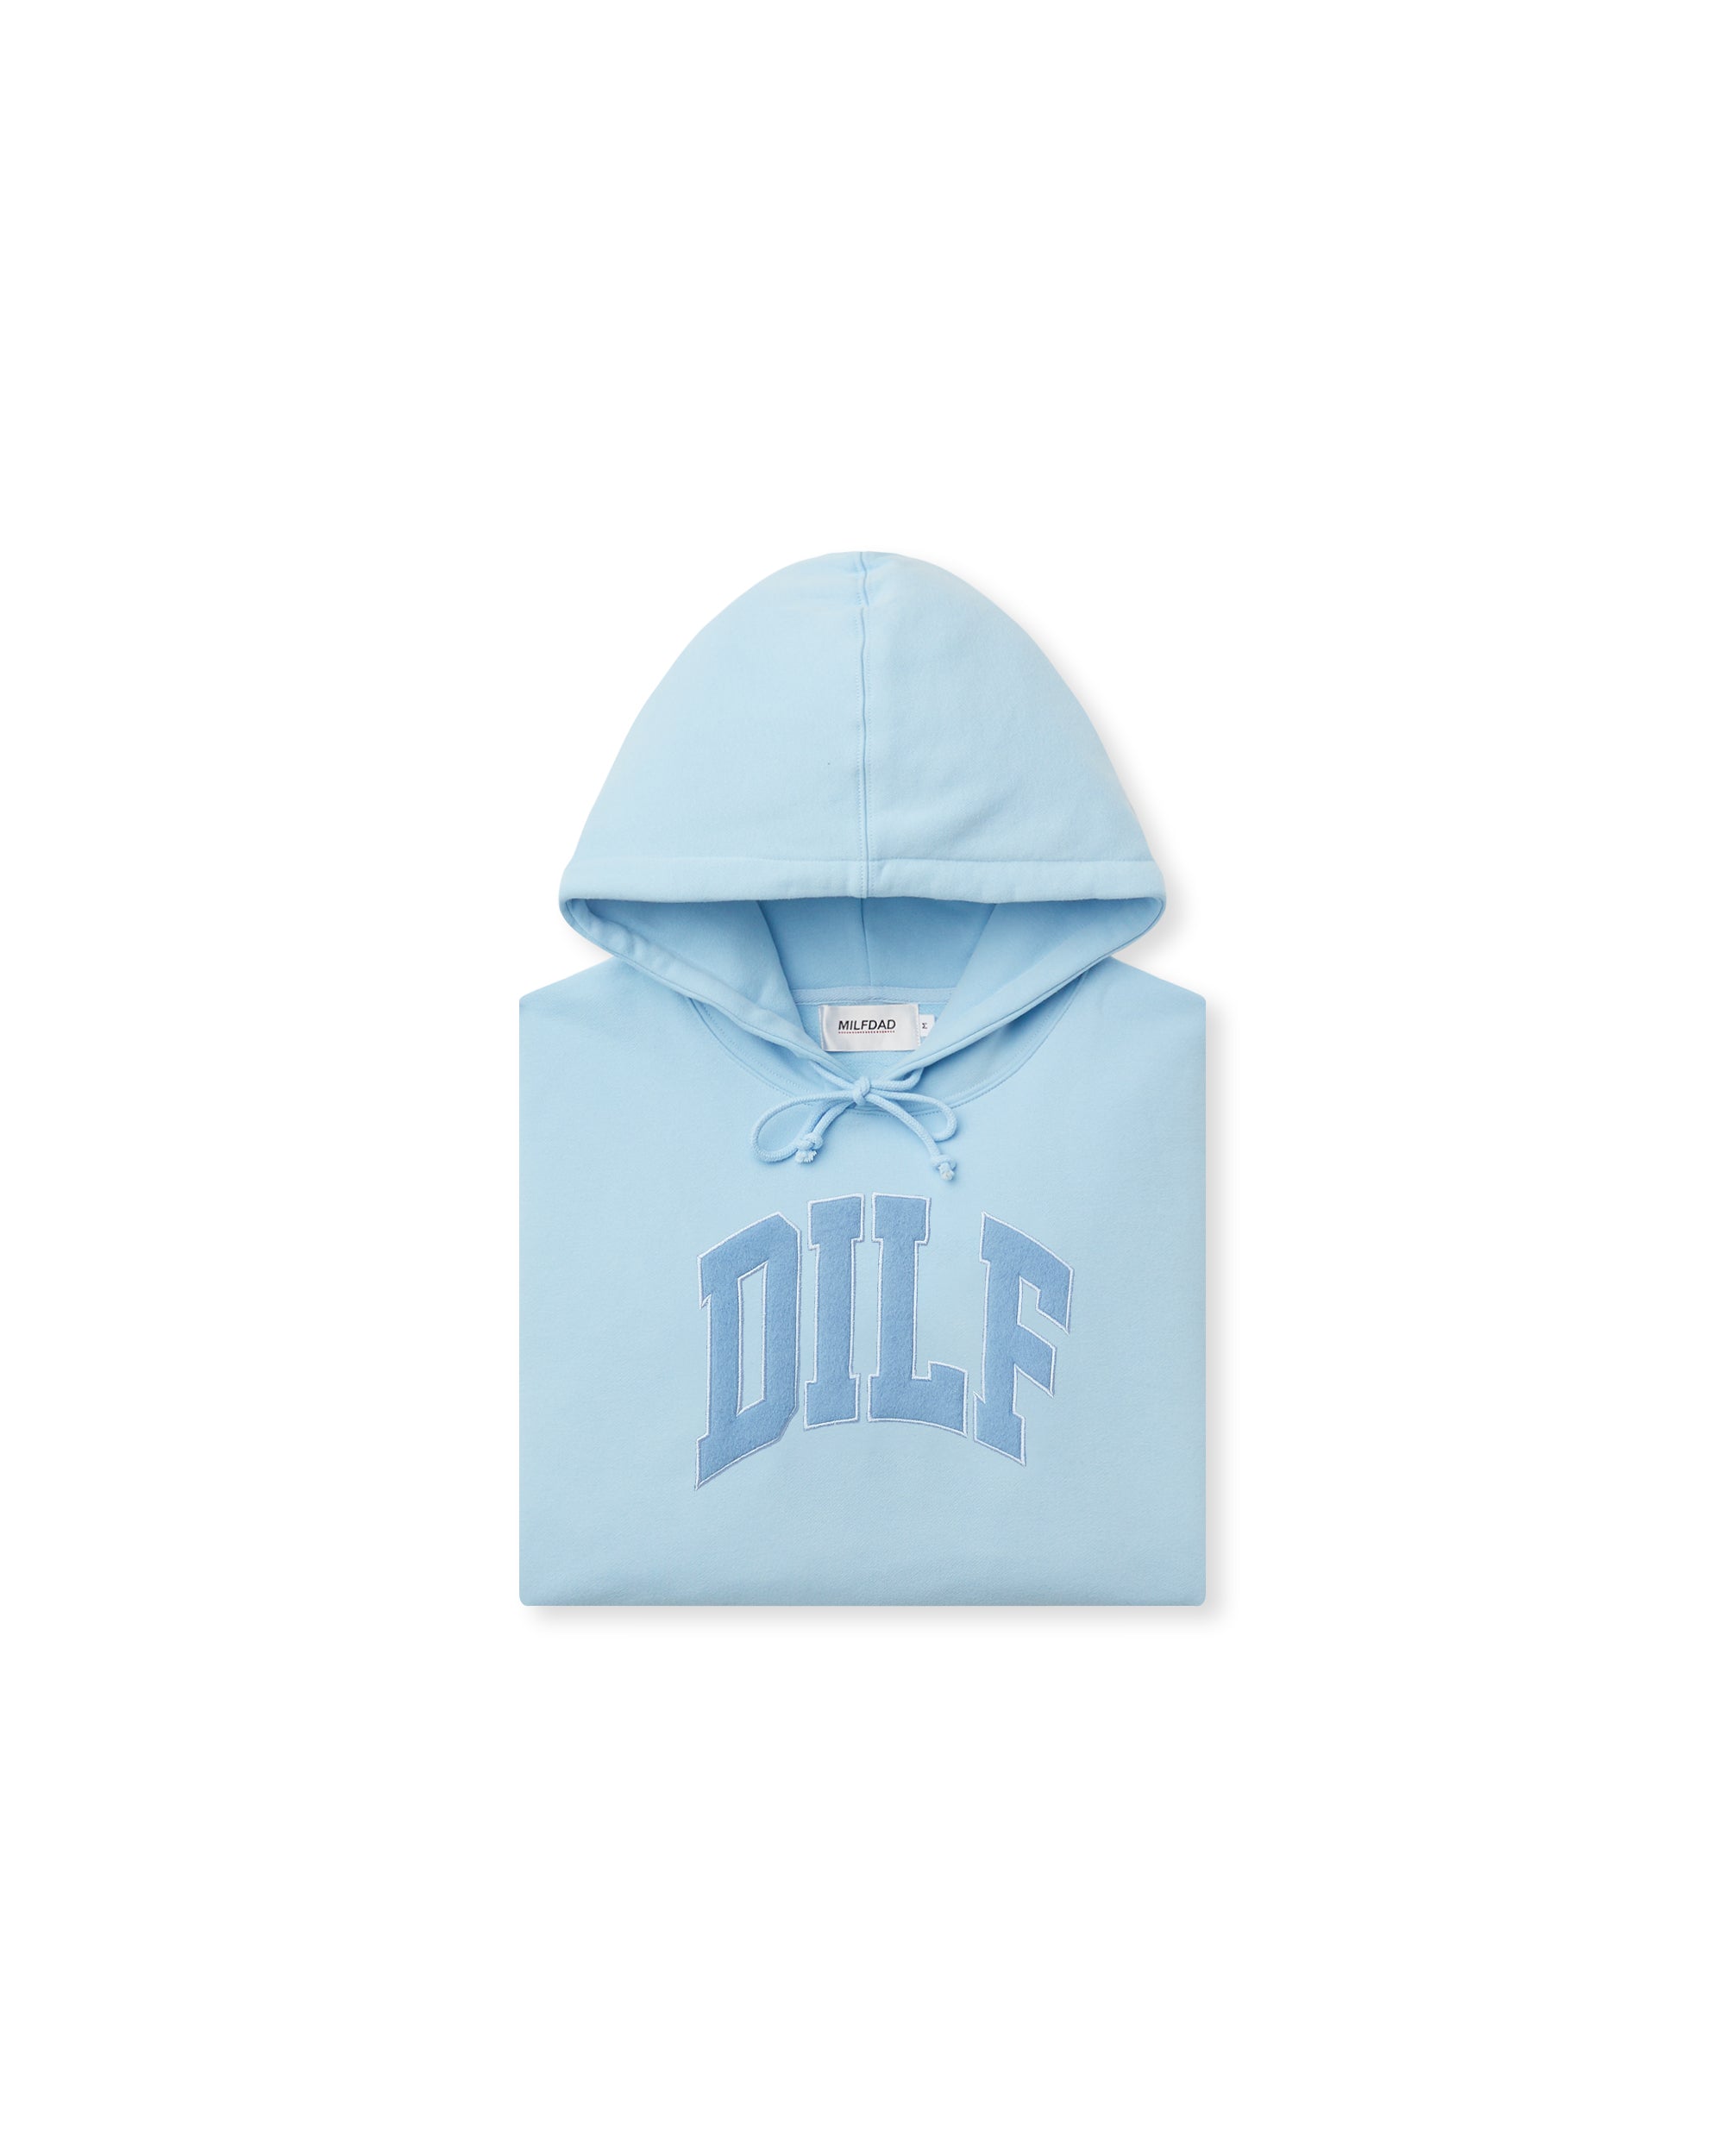 DILF Arc Logo Hoodie - Baby Blue